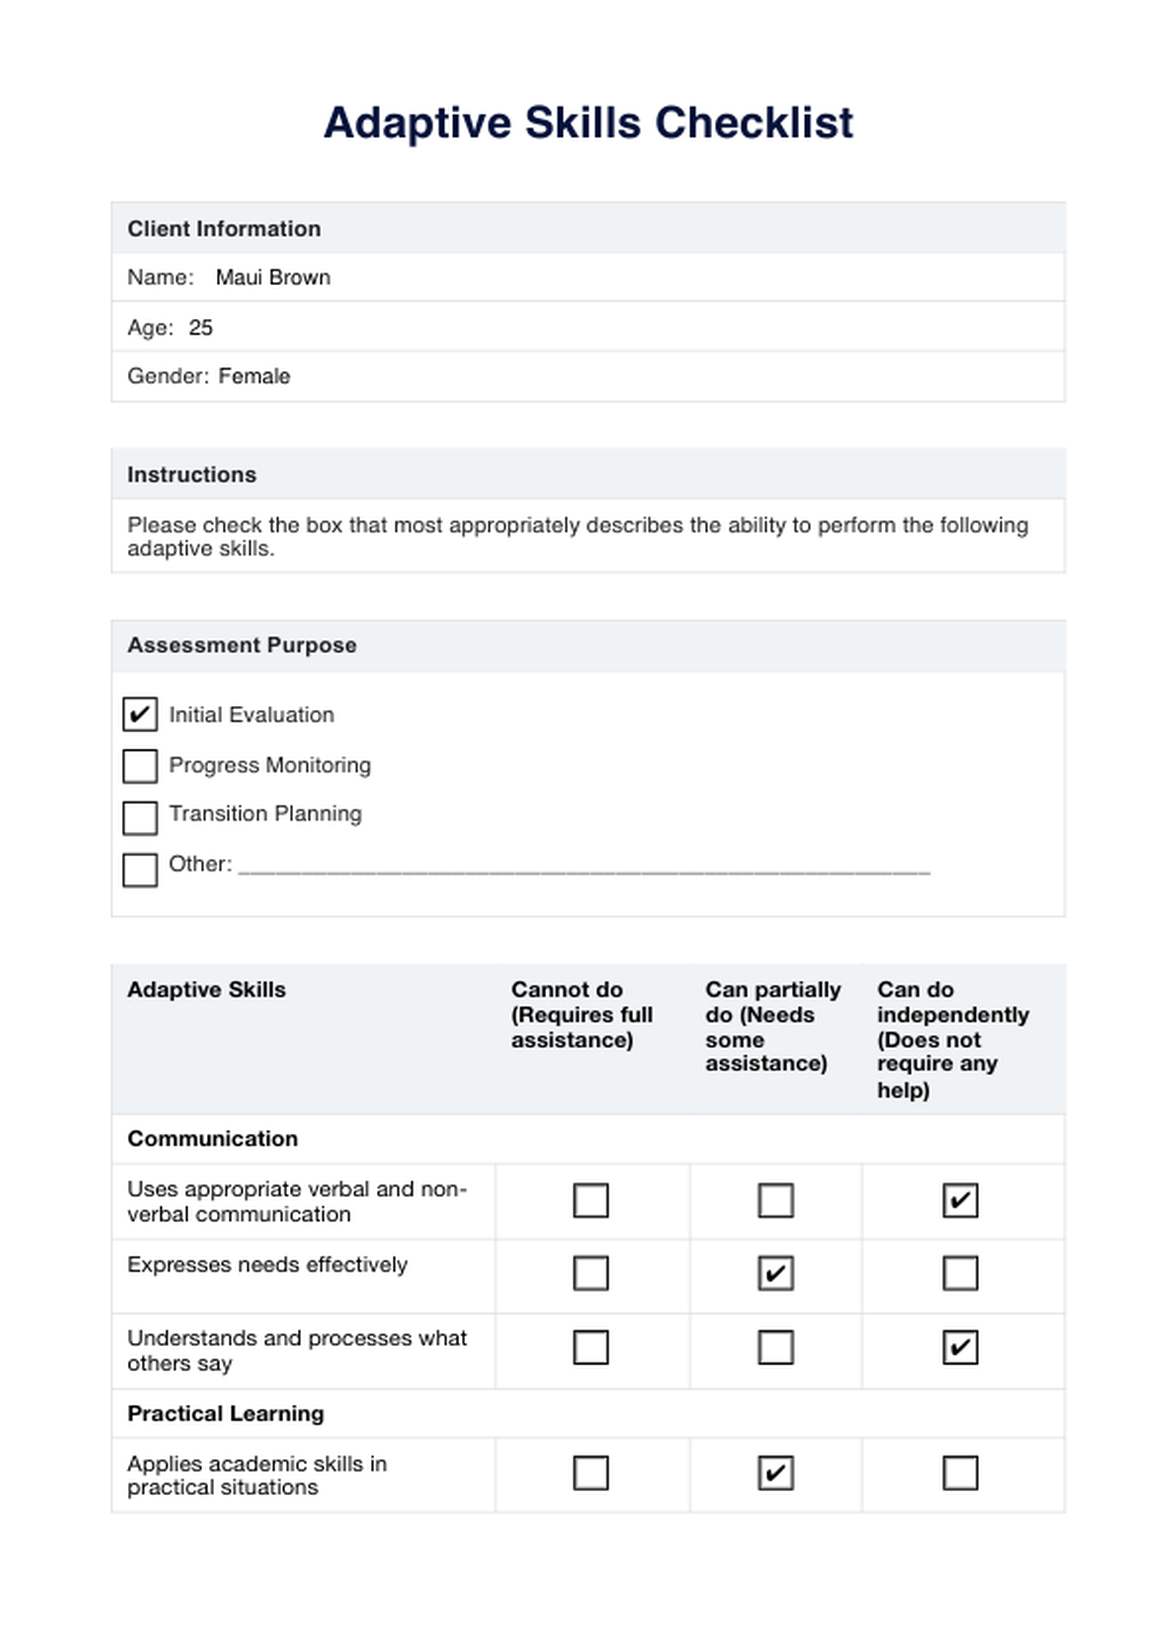 Adaptive Skills Checklist PDF Example